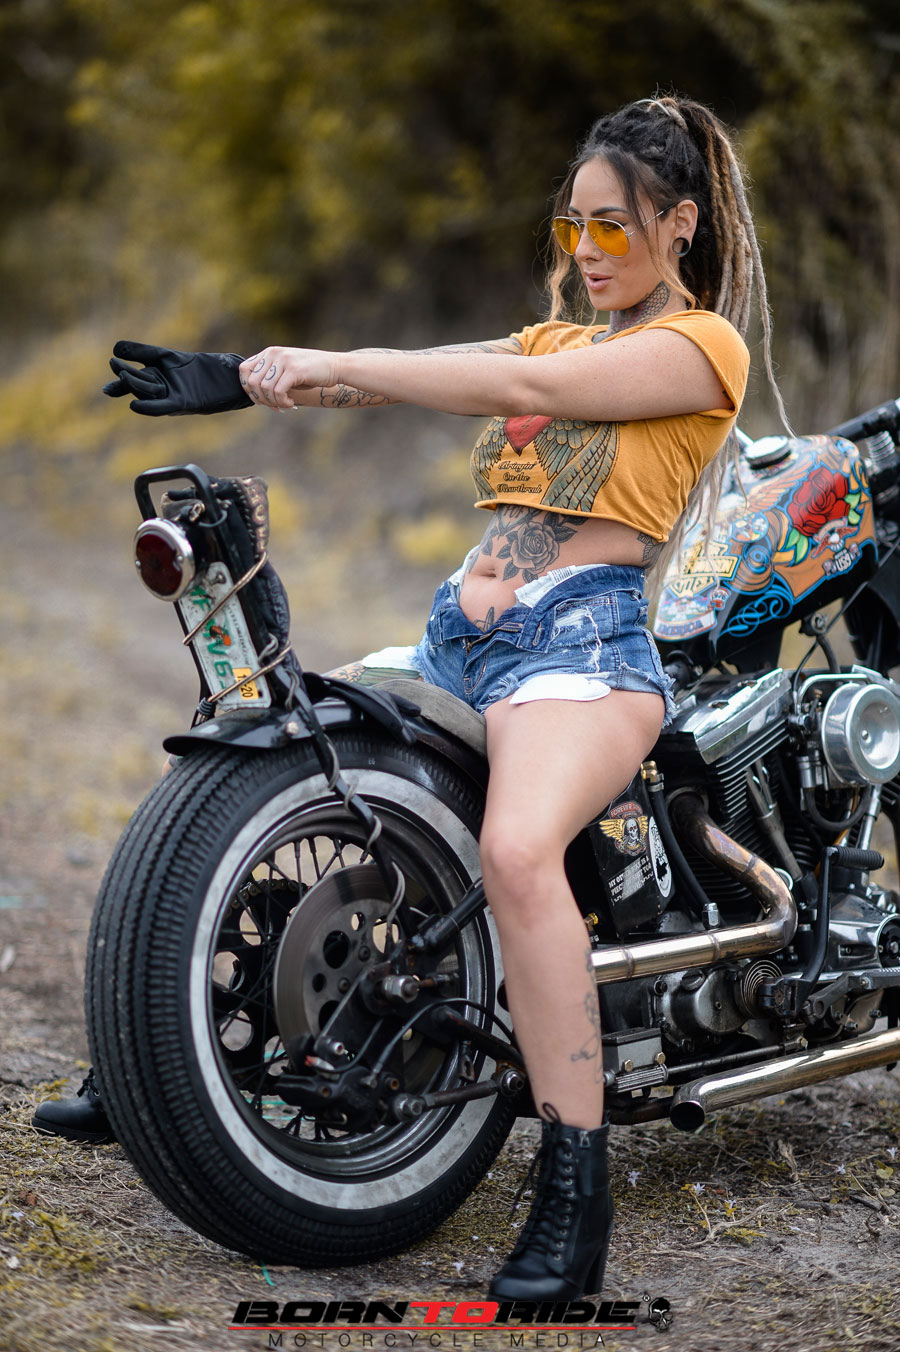 Biker Babe Velvet Queen 35 Born To Ride Motorcycle Magazine